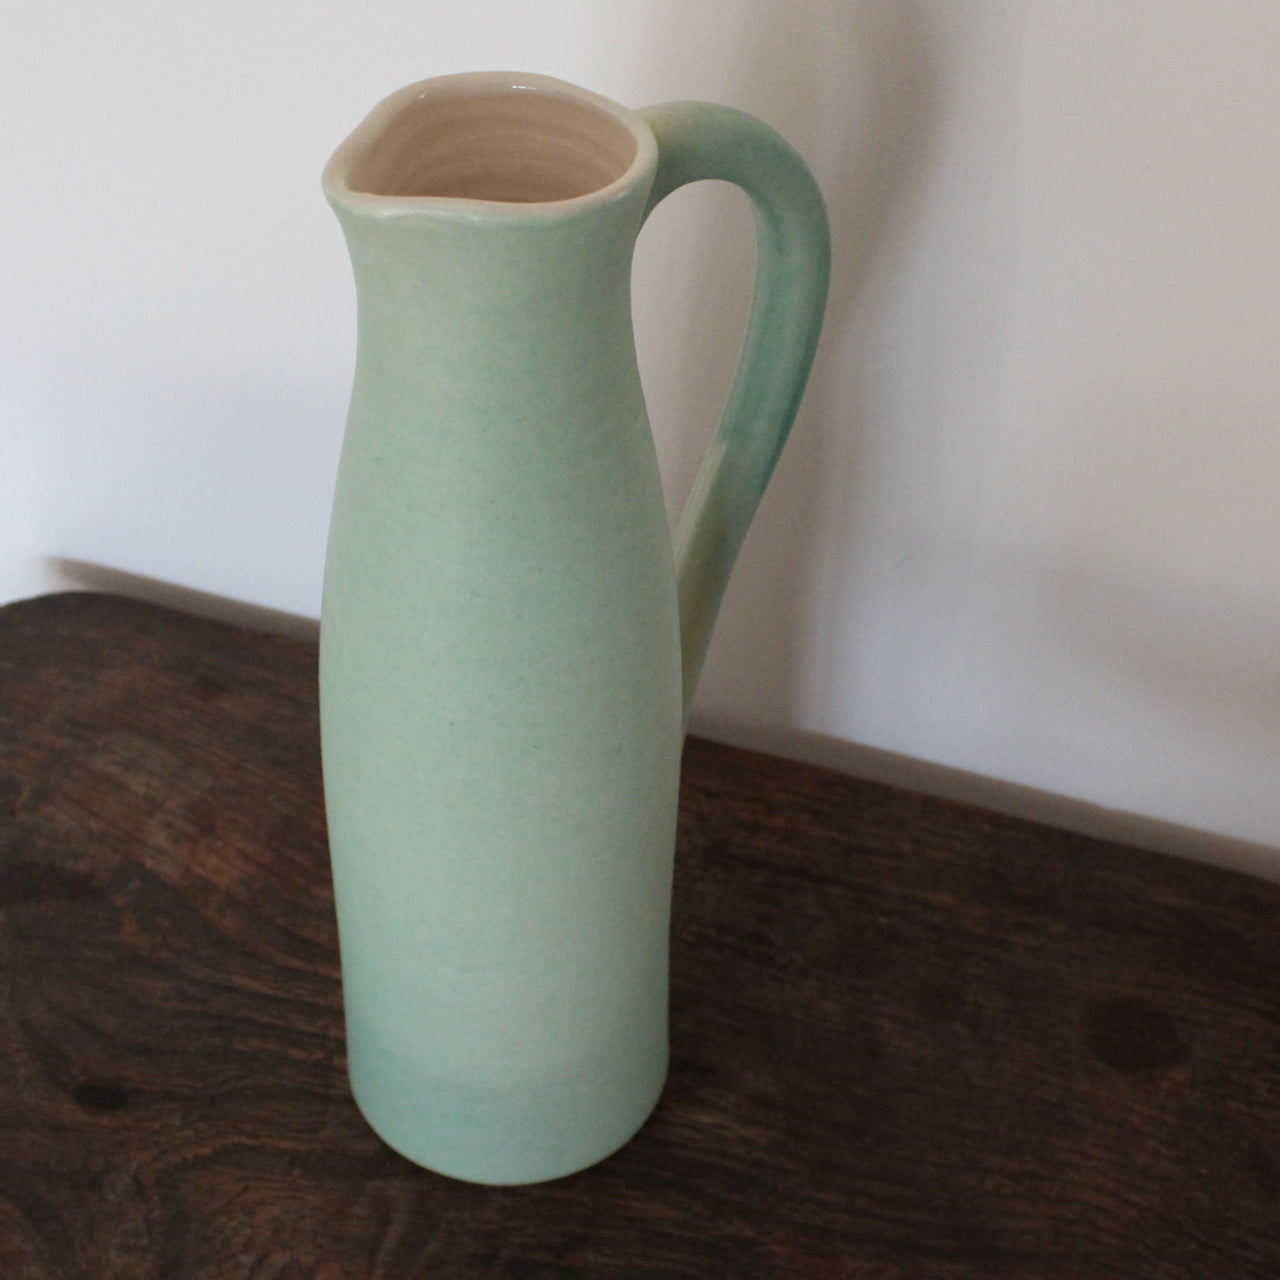 Lucy Burley duck egg blue ceramic jug